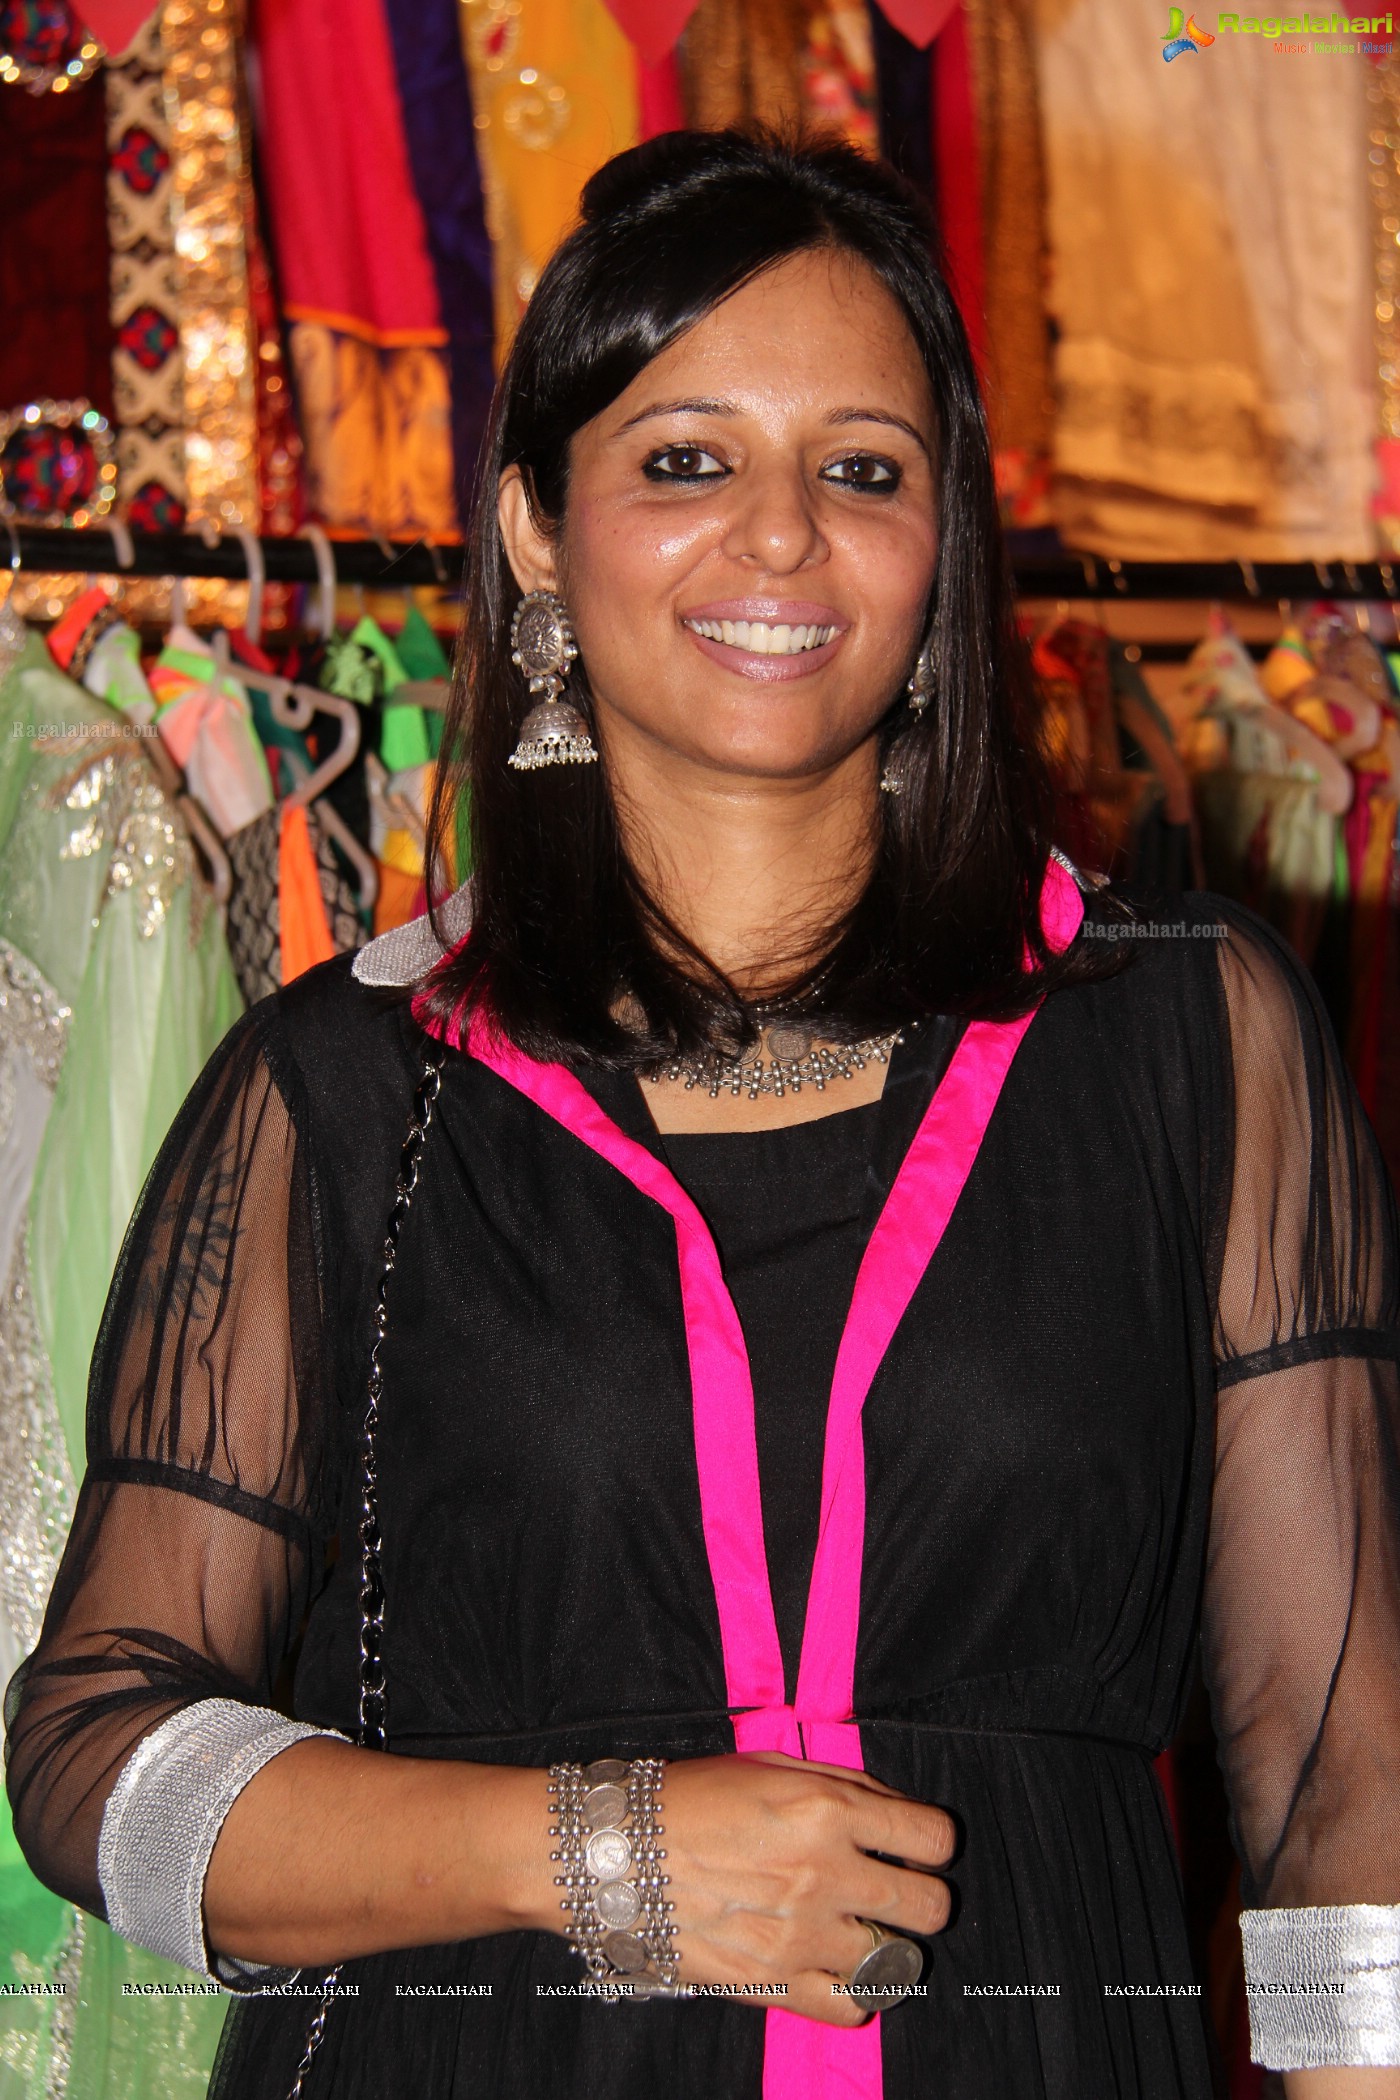 Akritti Elite: The Day and Night Bazaar in Hyderabad